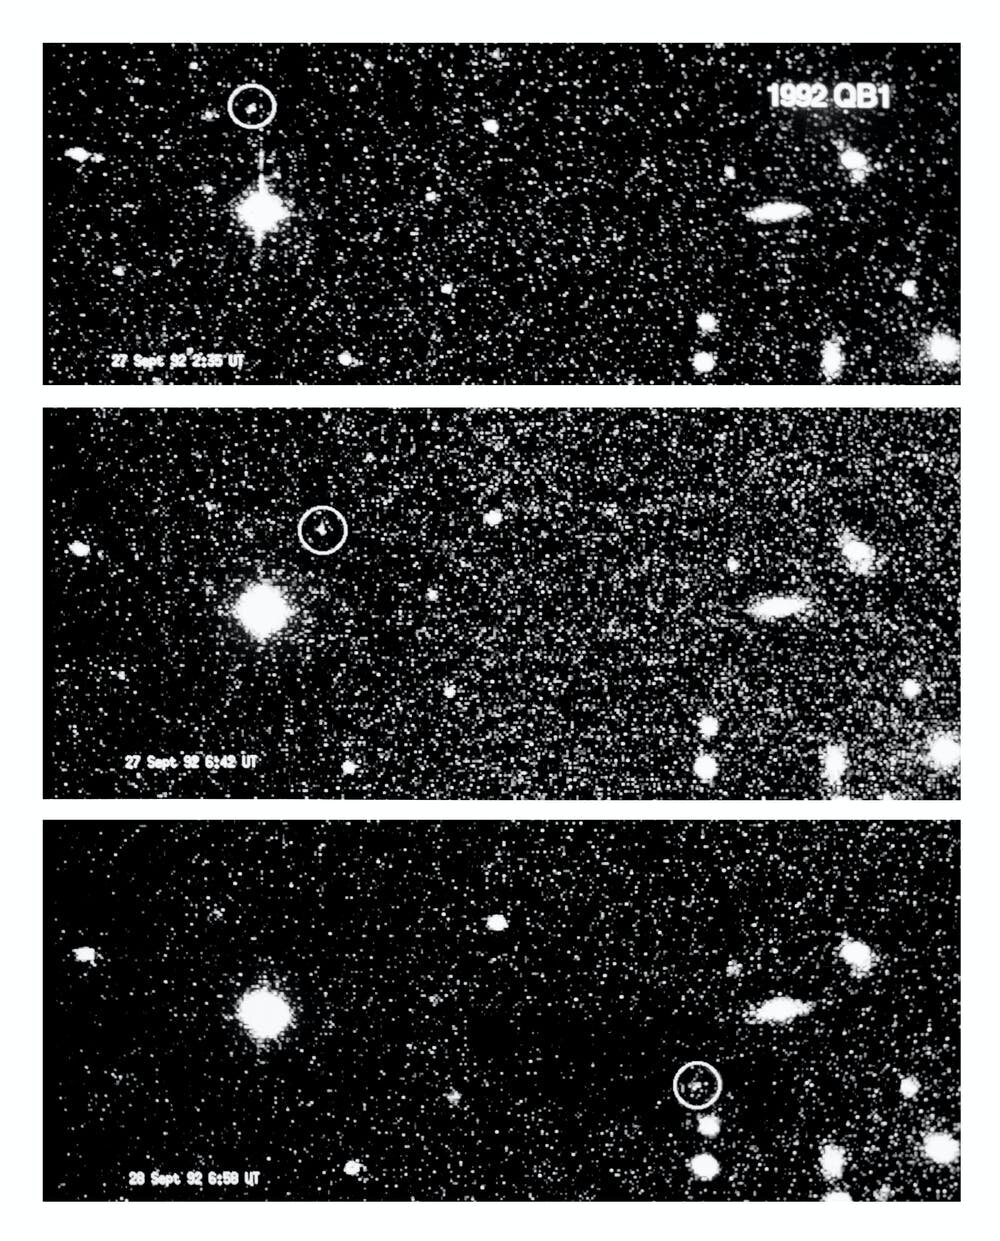 Unseen 'planetary mass object' signalled by warped Kuiper Belt